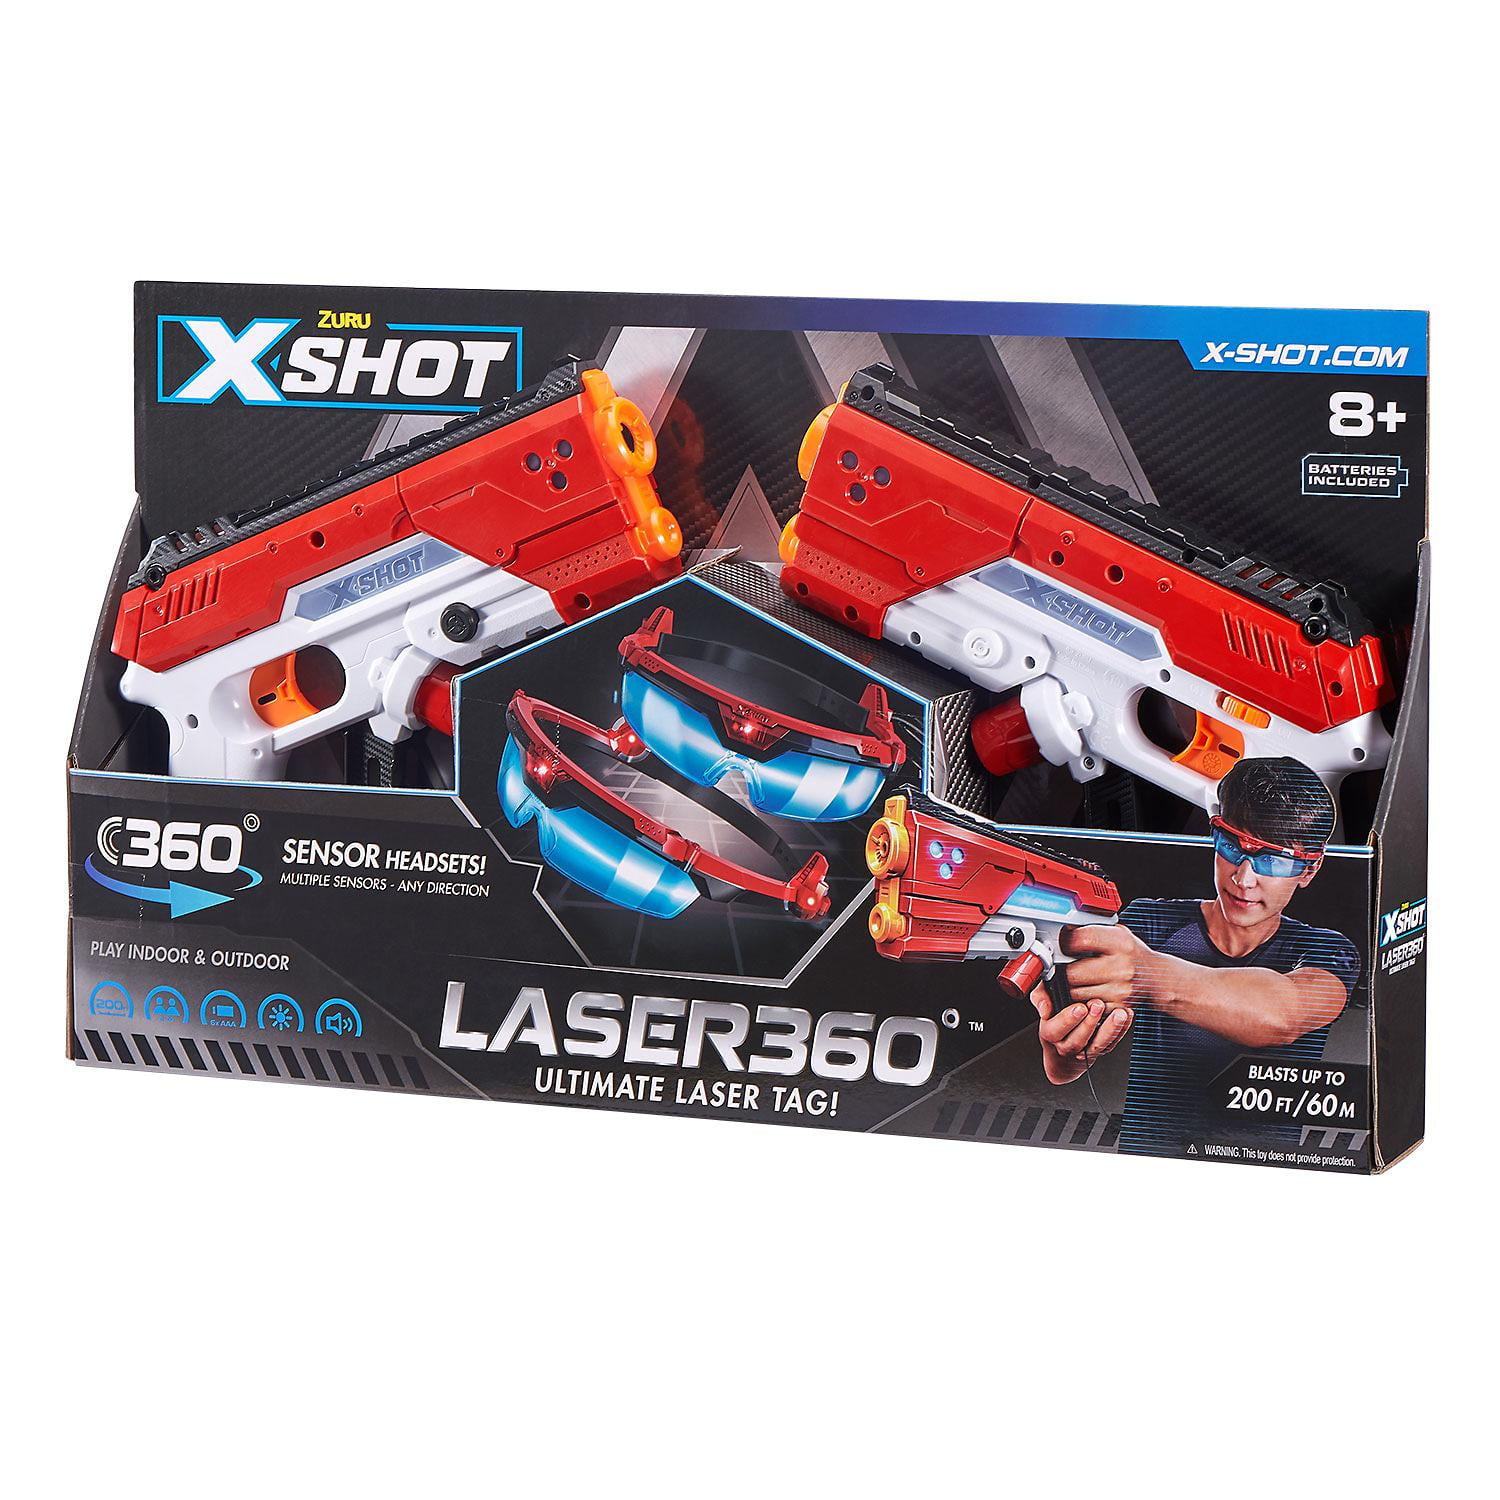 ZURU X-shot 36280 Laser360 Double Laser Blaster Pack in for sale online 